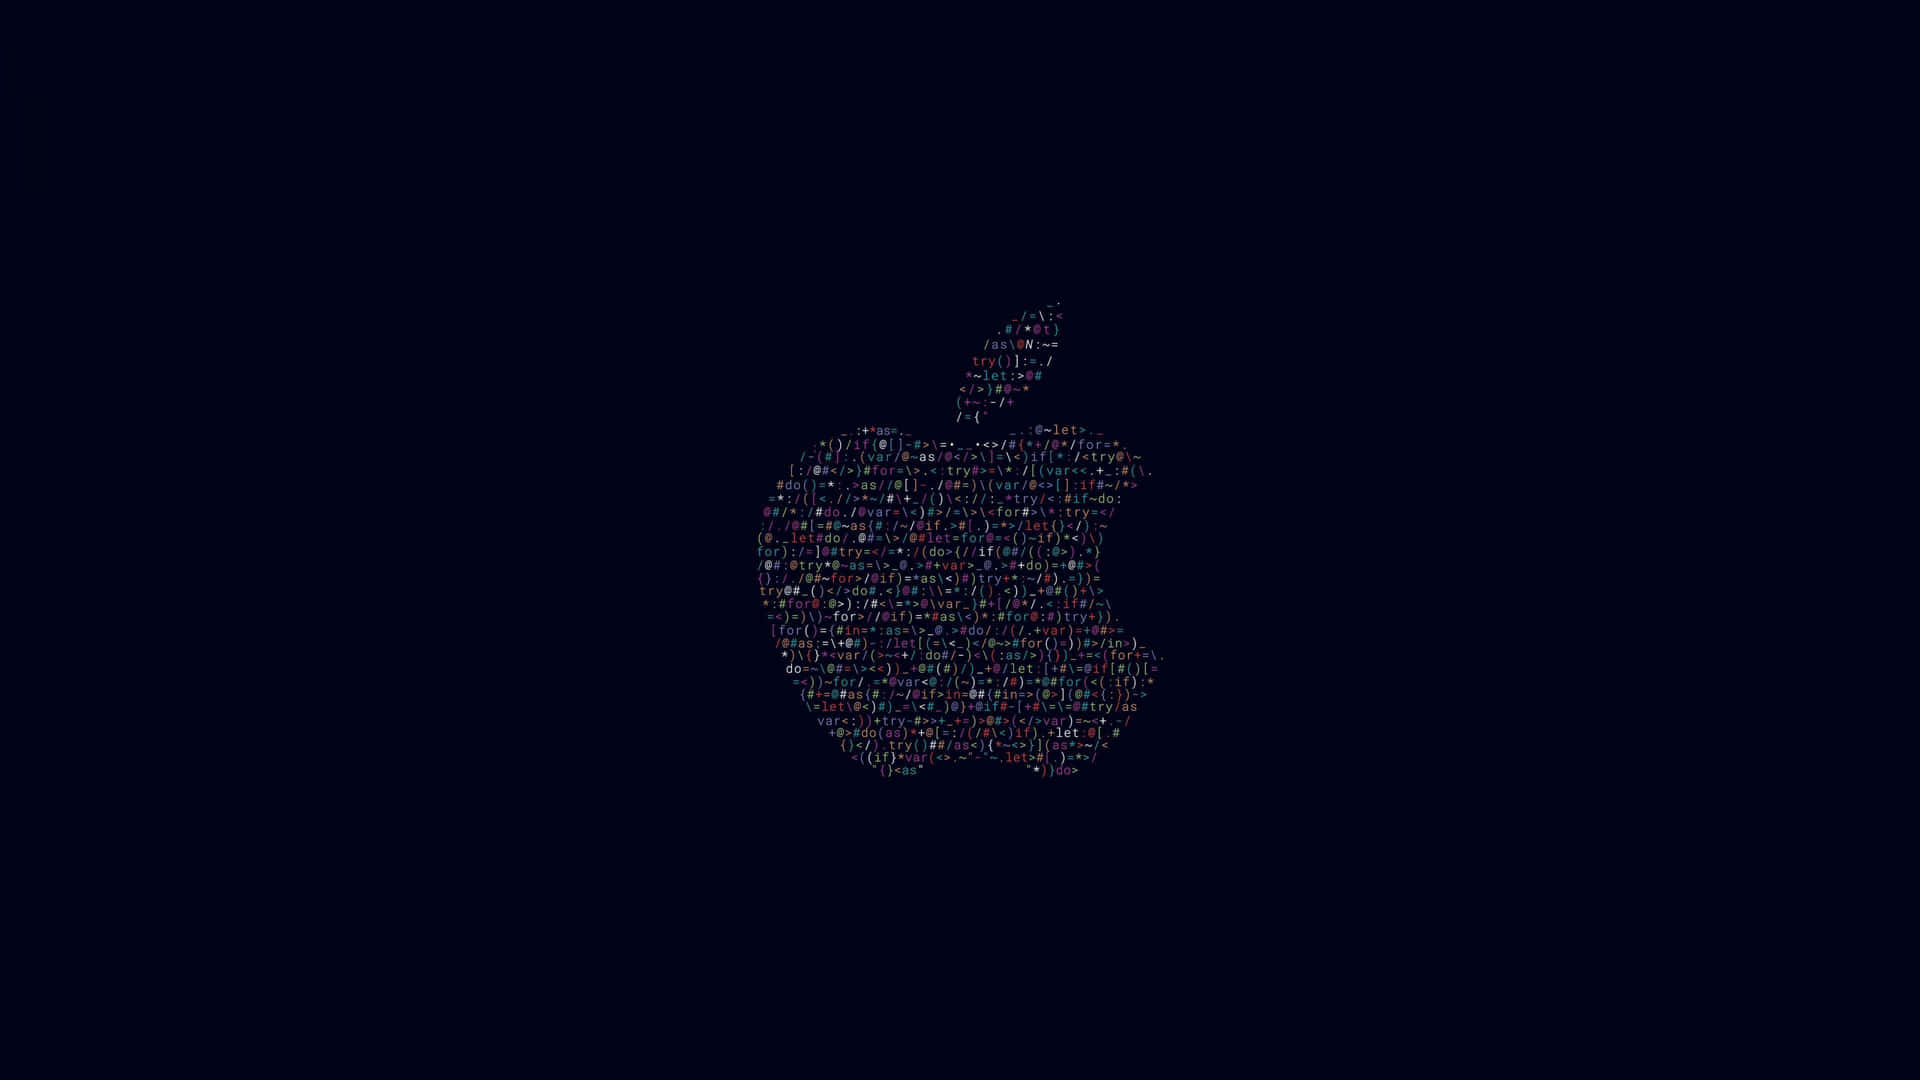 Glossy Apple Logo on a 4K Monitor Wallpaper